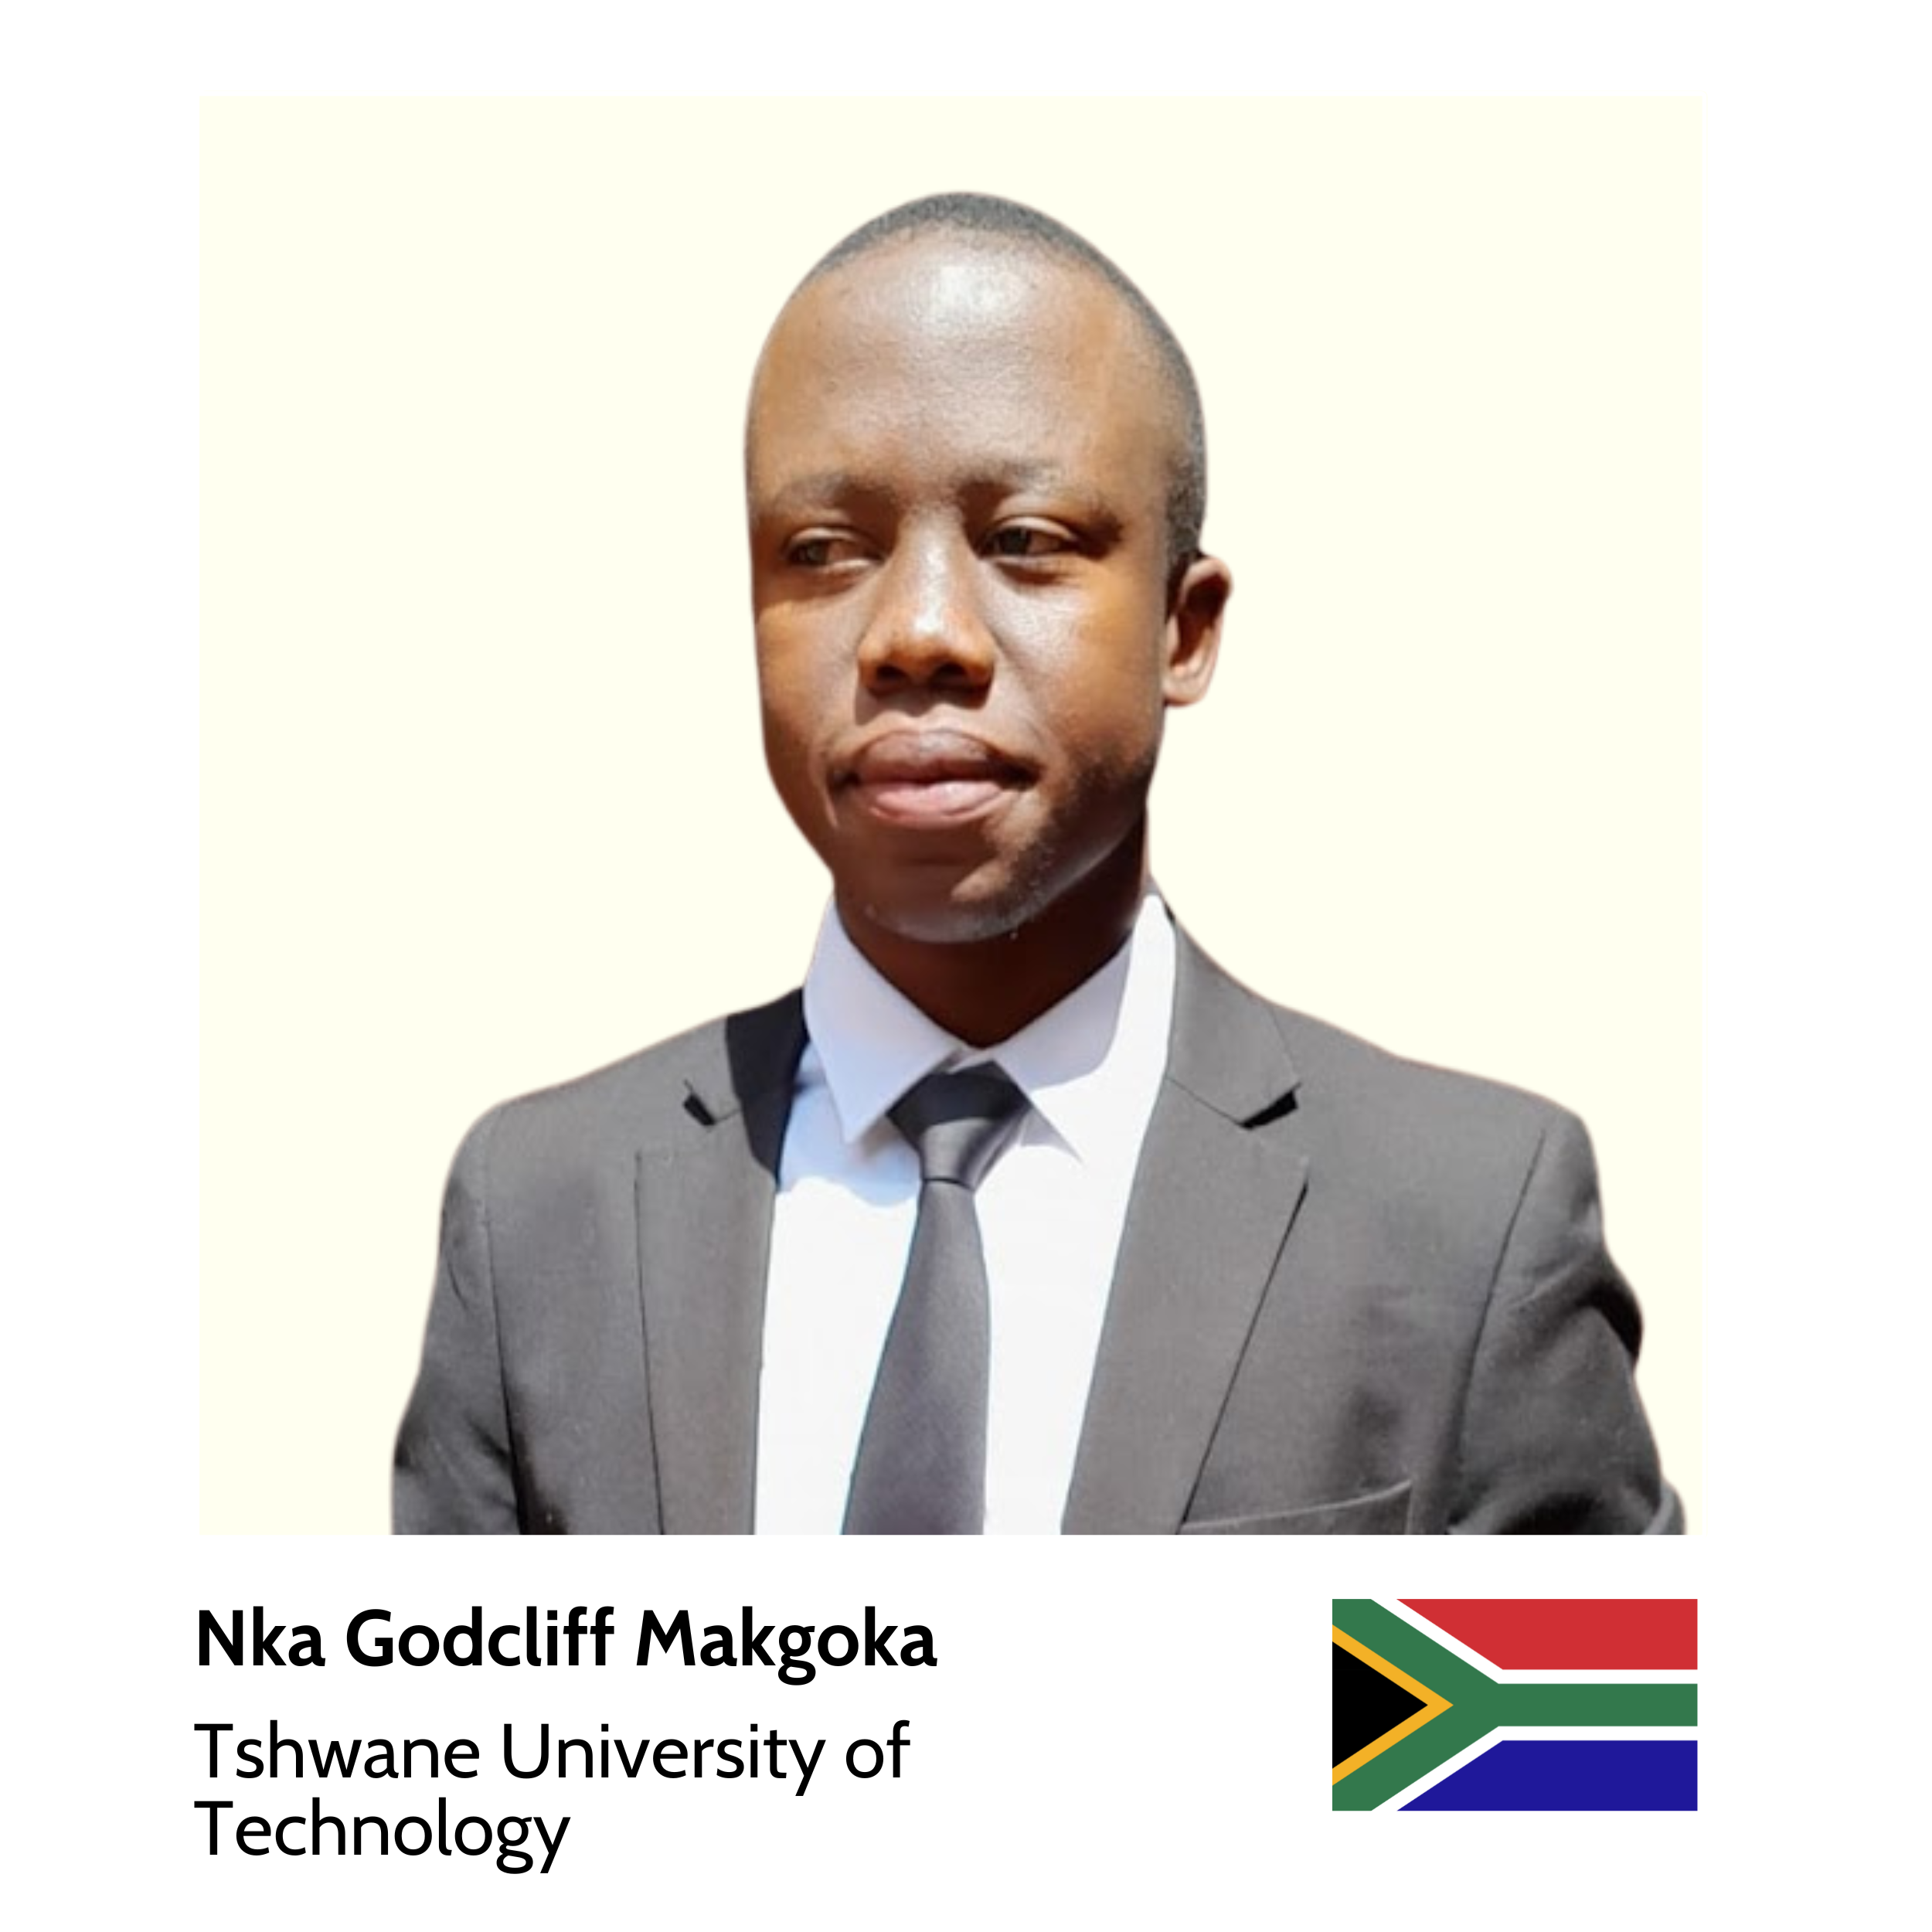 Your_Big_Year_ibm_z_student_ambassador_Nka_Godcliff_Makgoka_Tshwane_University_of_Technology.png